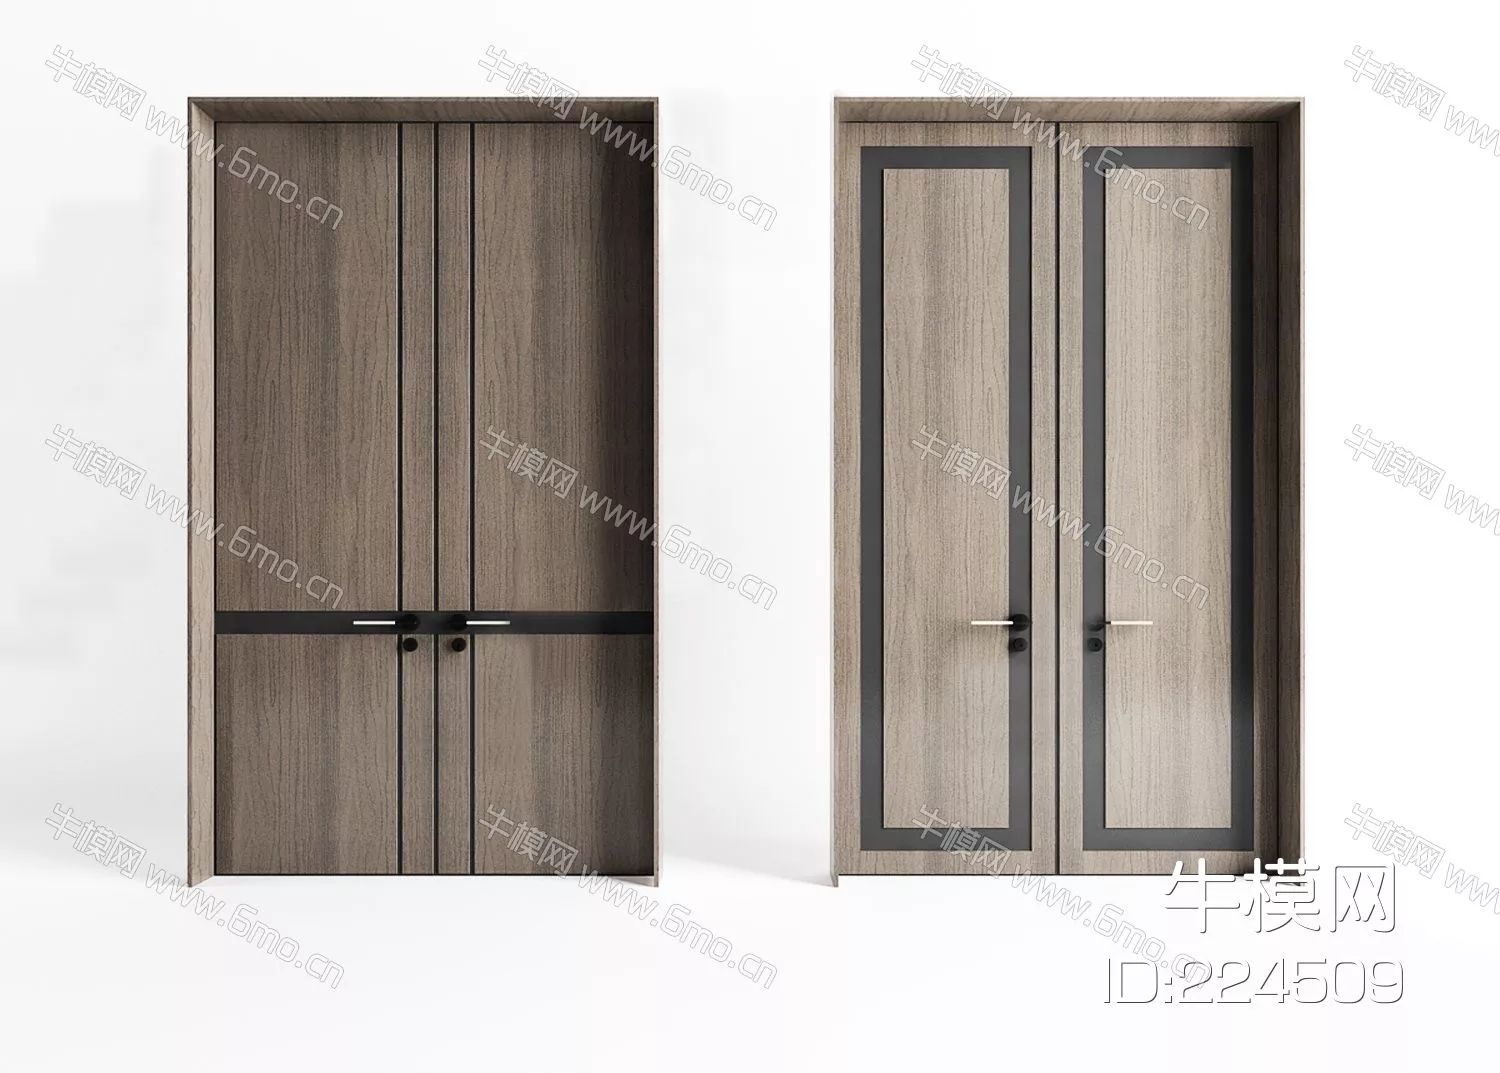 MODERN DOOR AND WINDOWS - SKETCHUP 3D MODEL - ENSCAPE - 224509